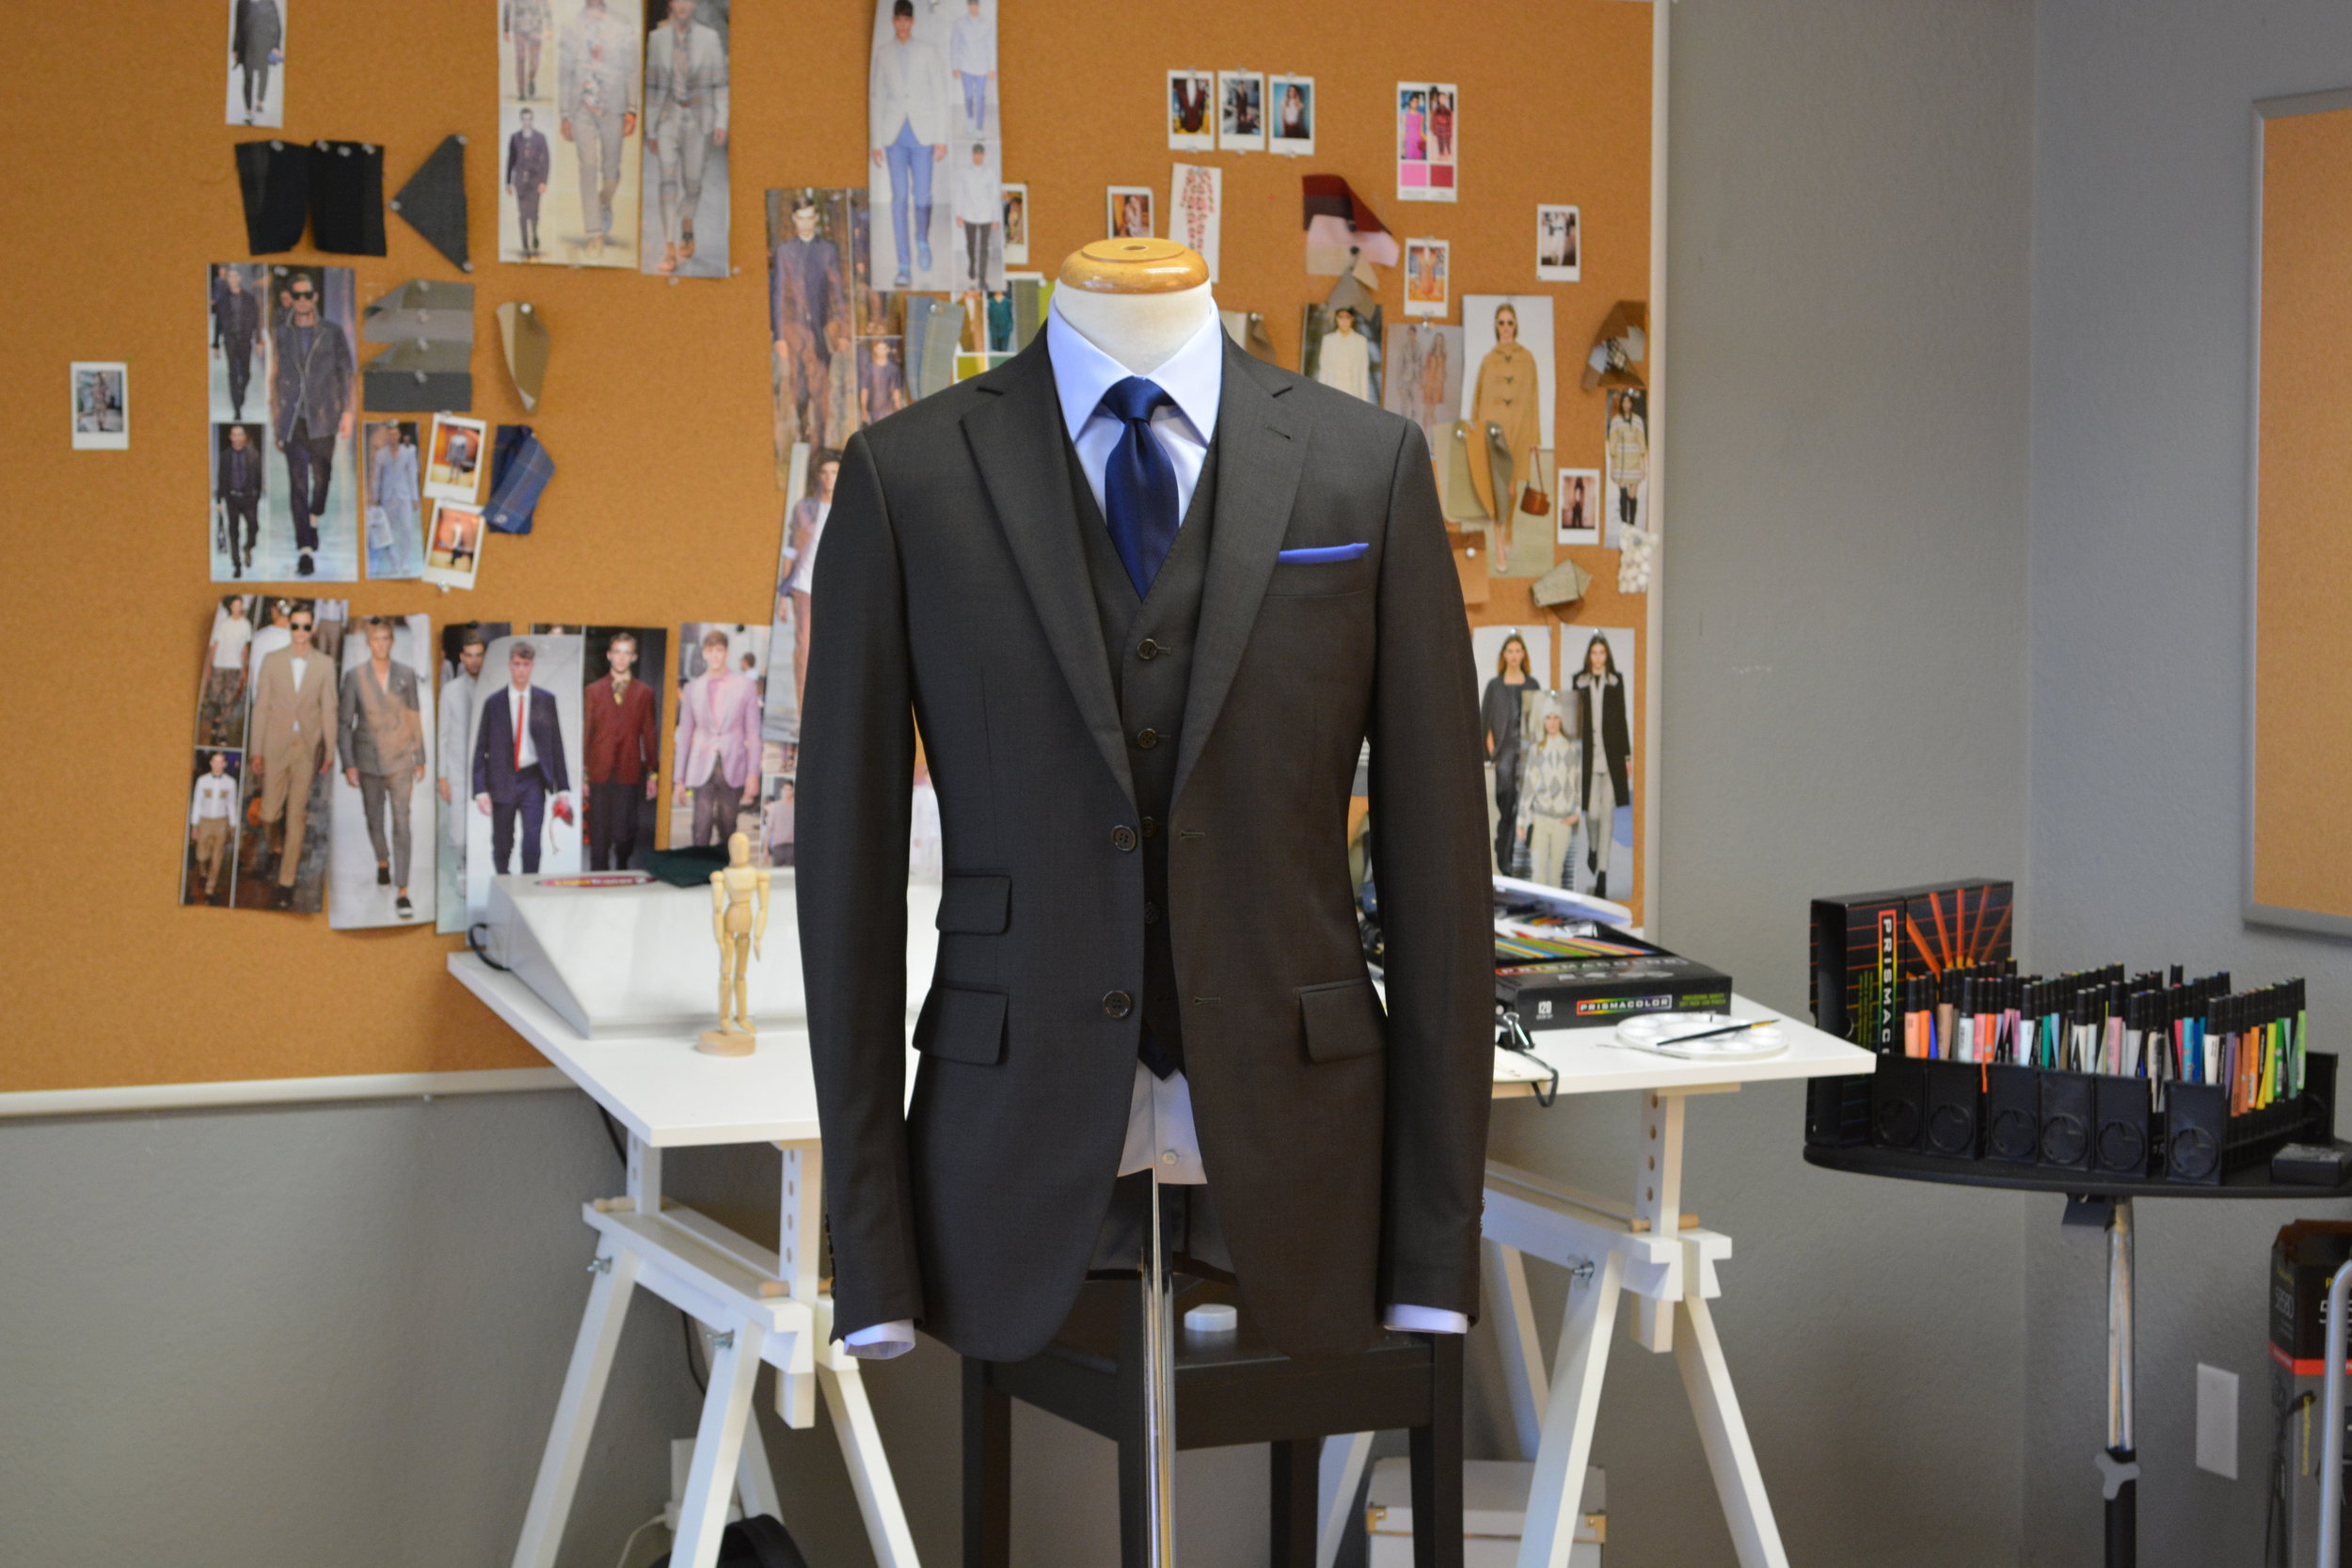 Tailor Suits